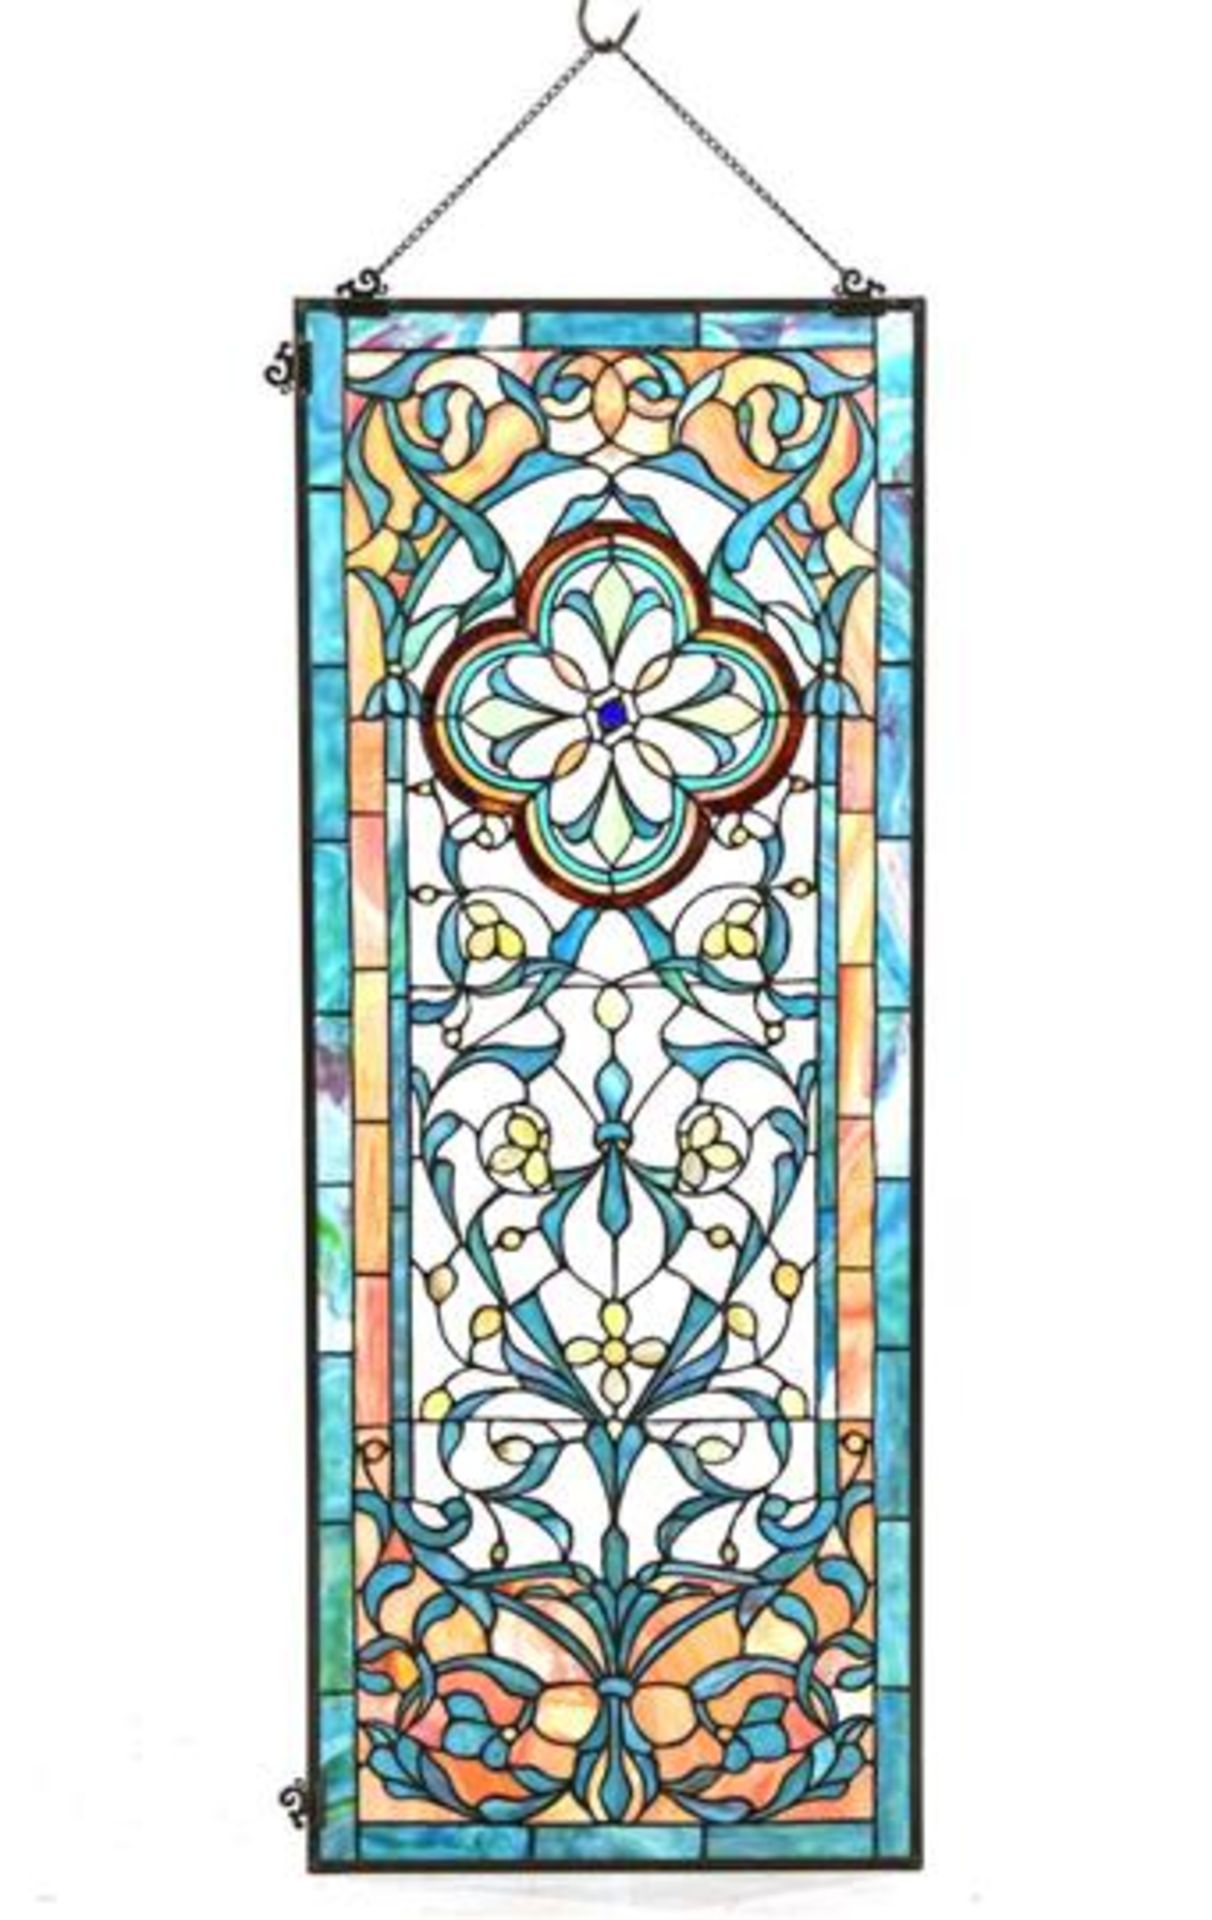 Stained glass window after Jugendstil example, 117x46 cm